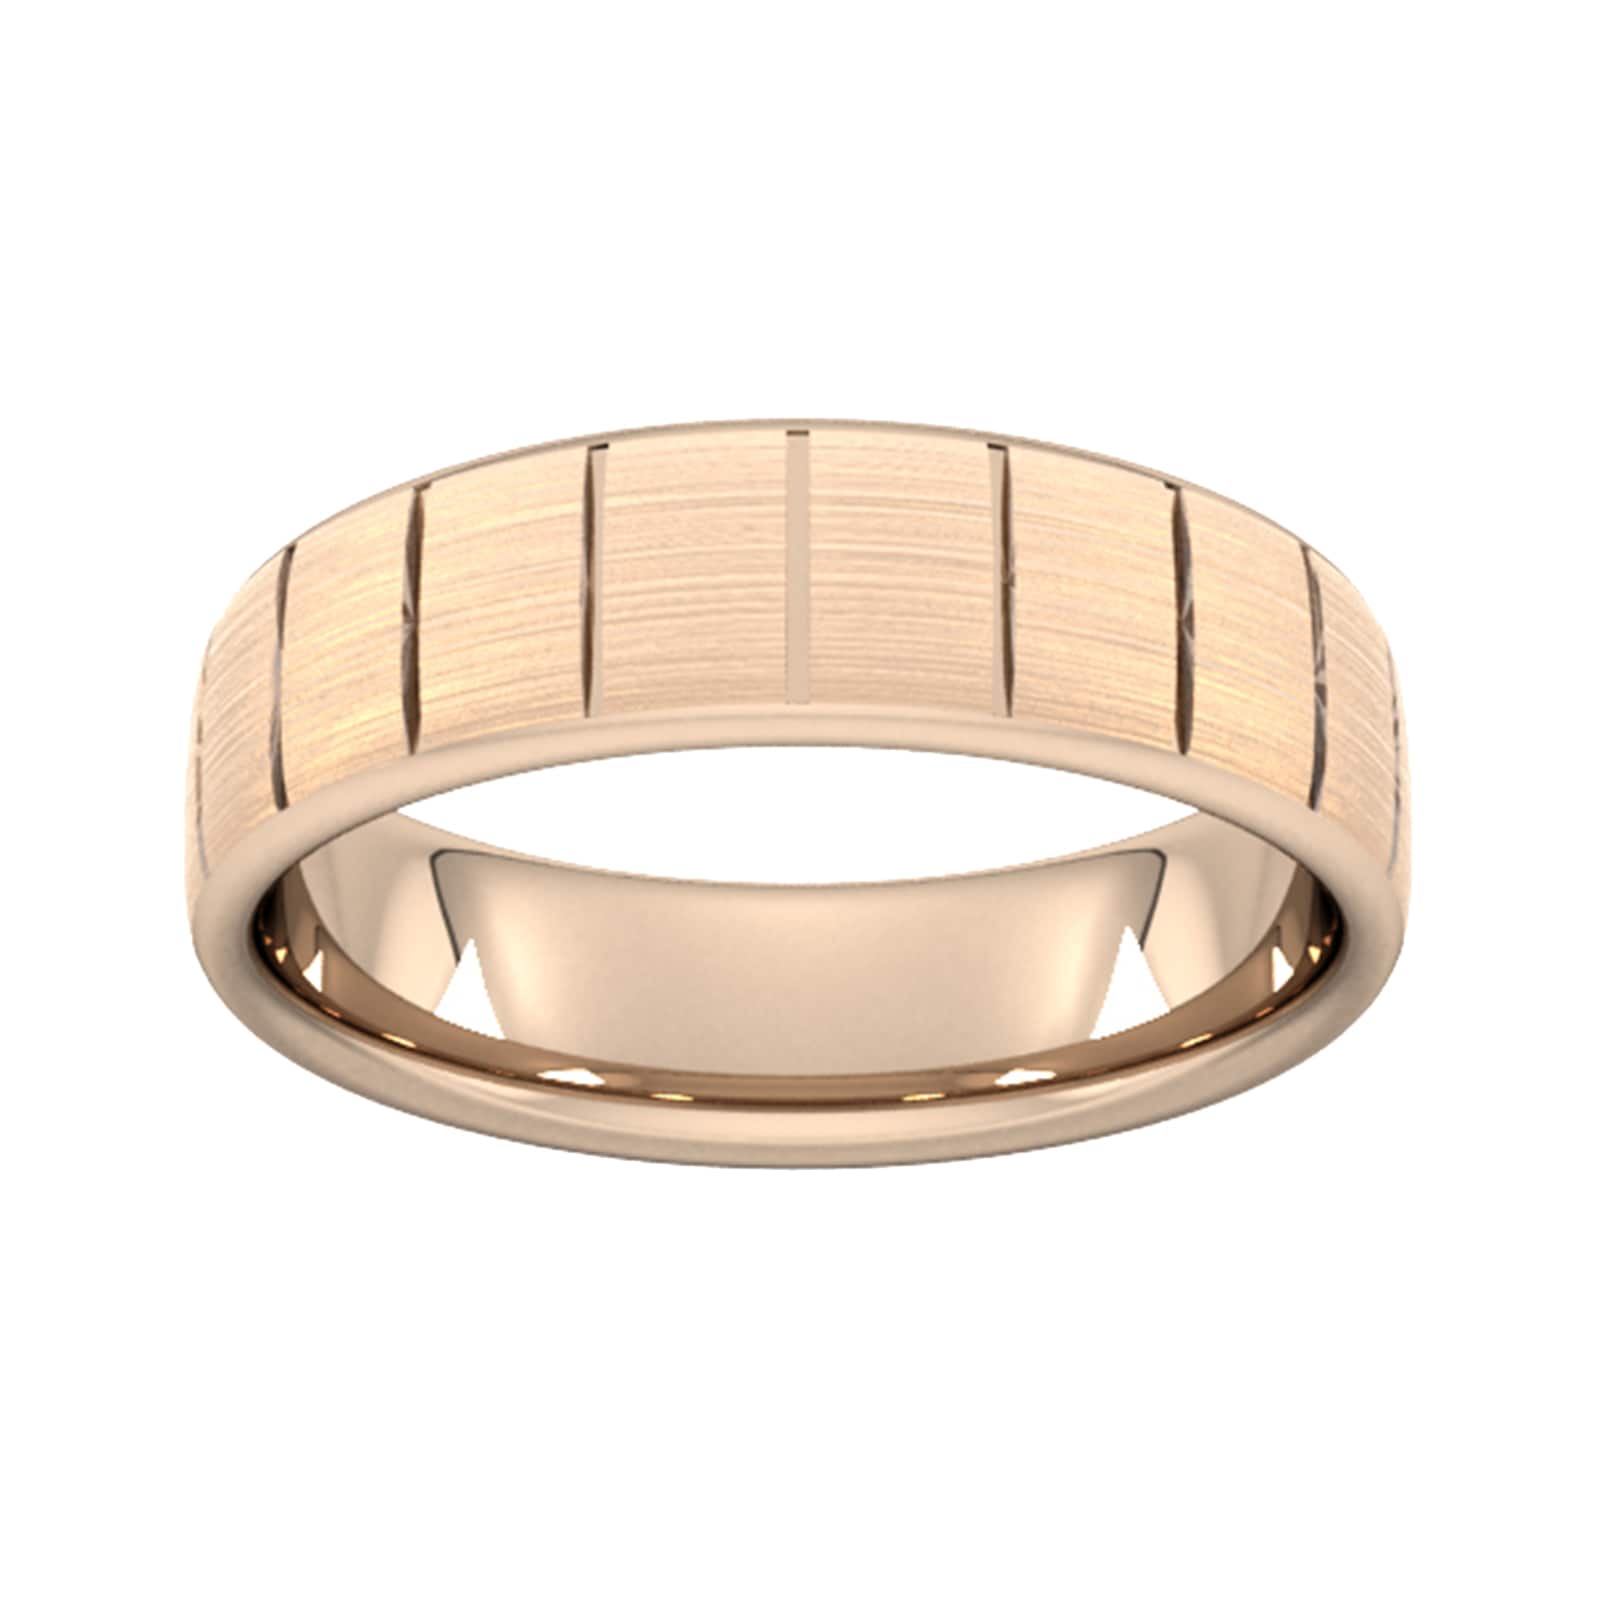 5mm D Shape Standard Vertical Lines Wedding Ring In 18 Carat Rose Gold - Ring Size R